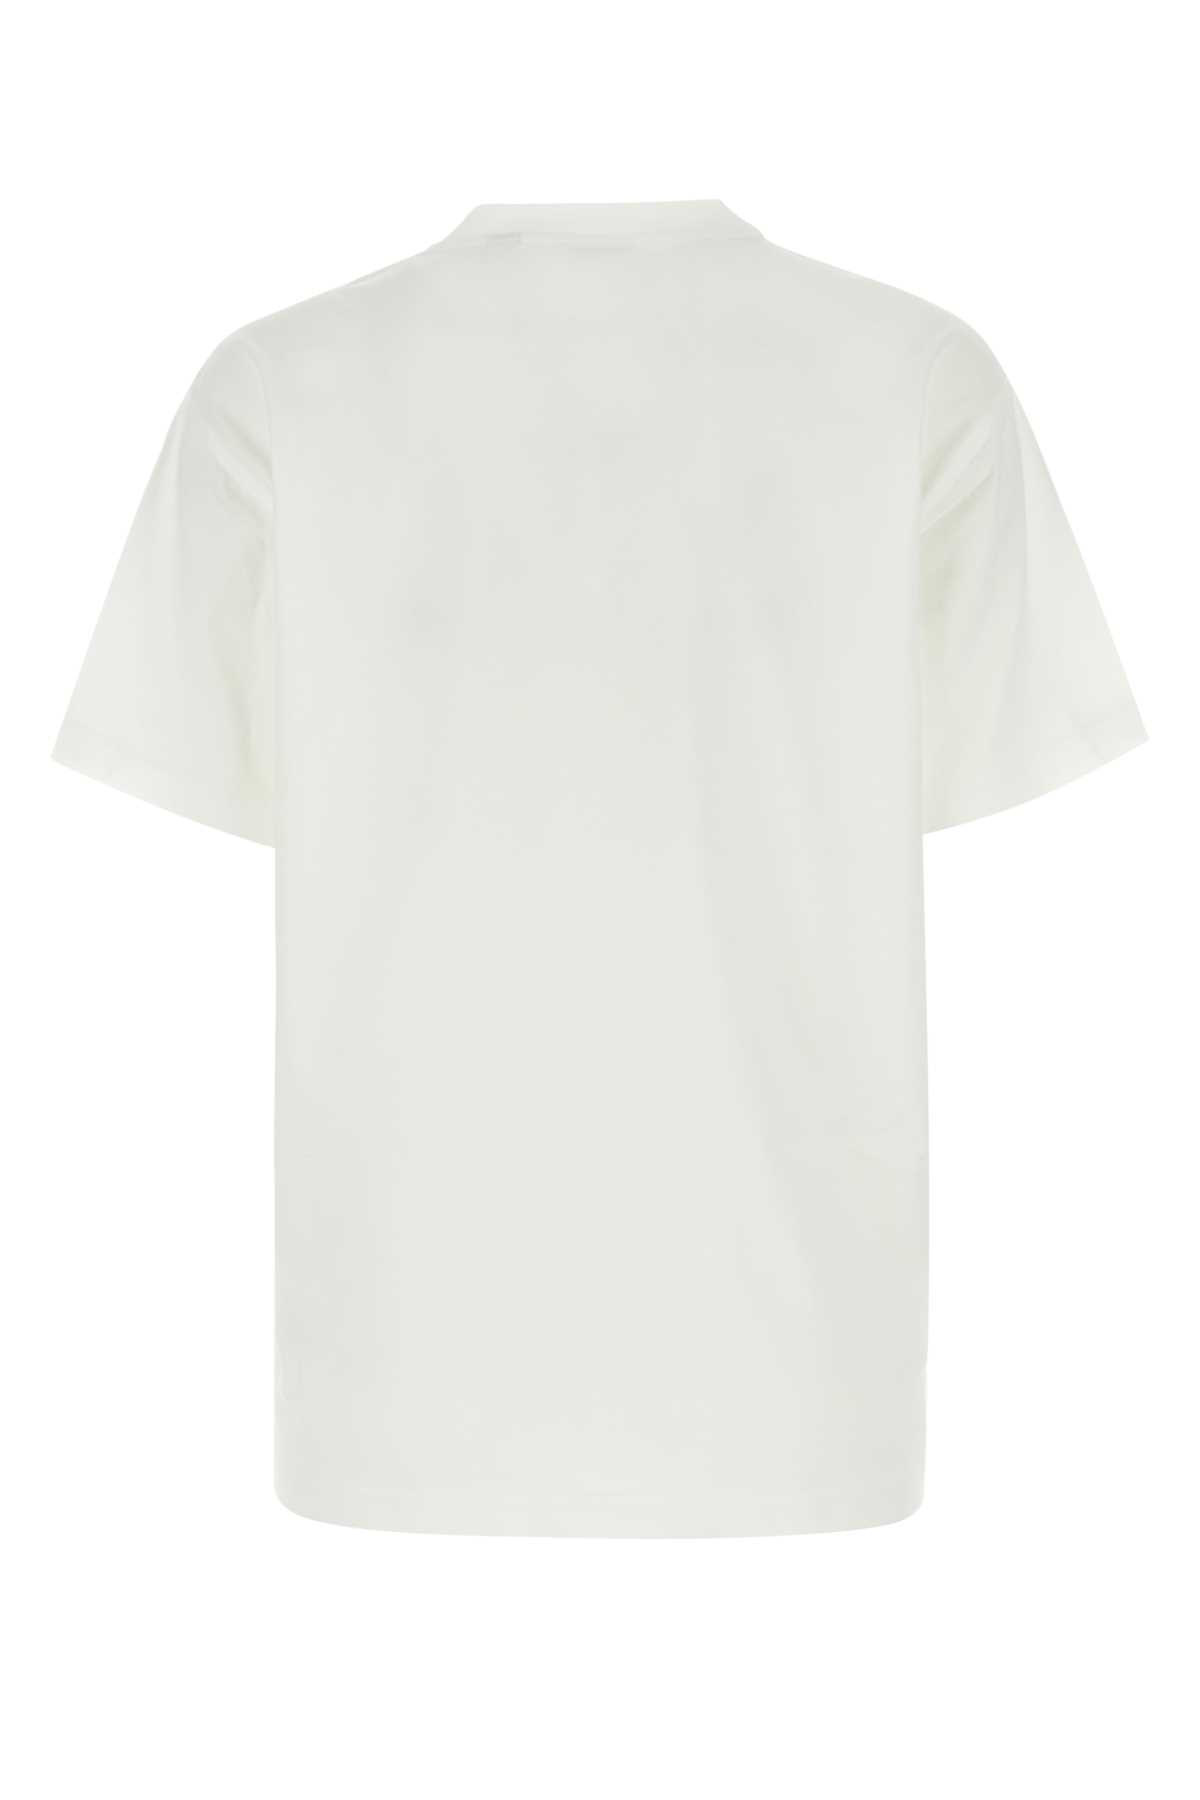 Burberry White Cotton Oversize T-shirt